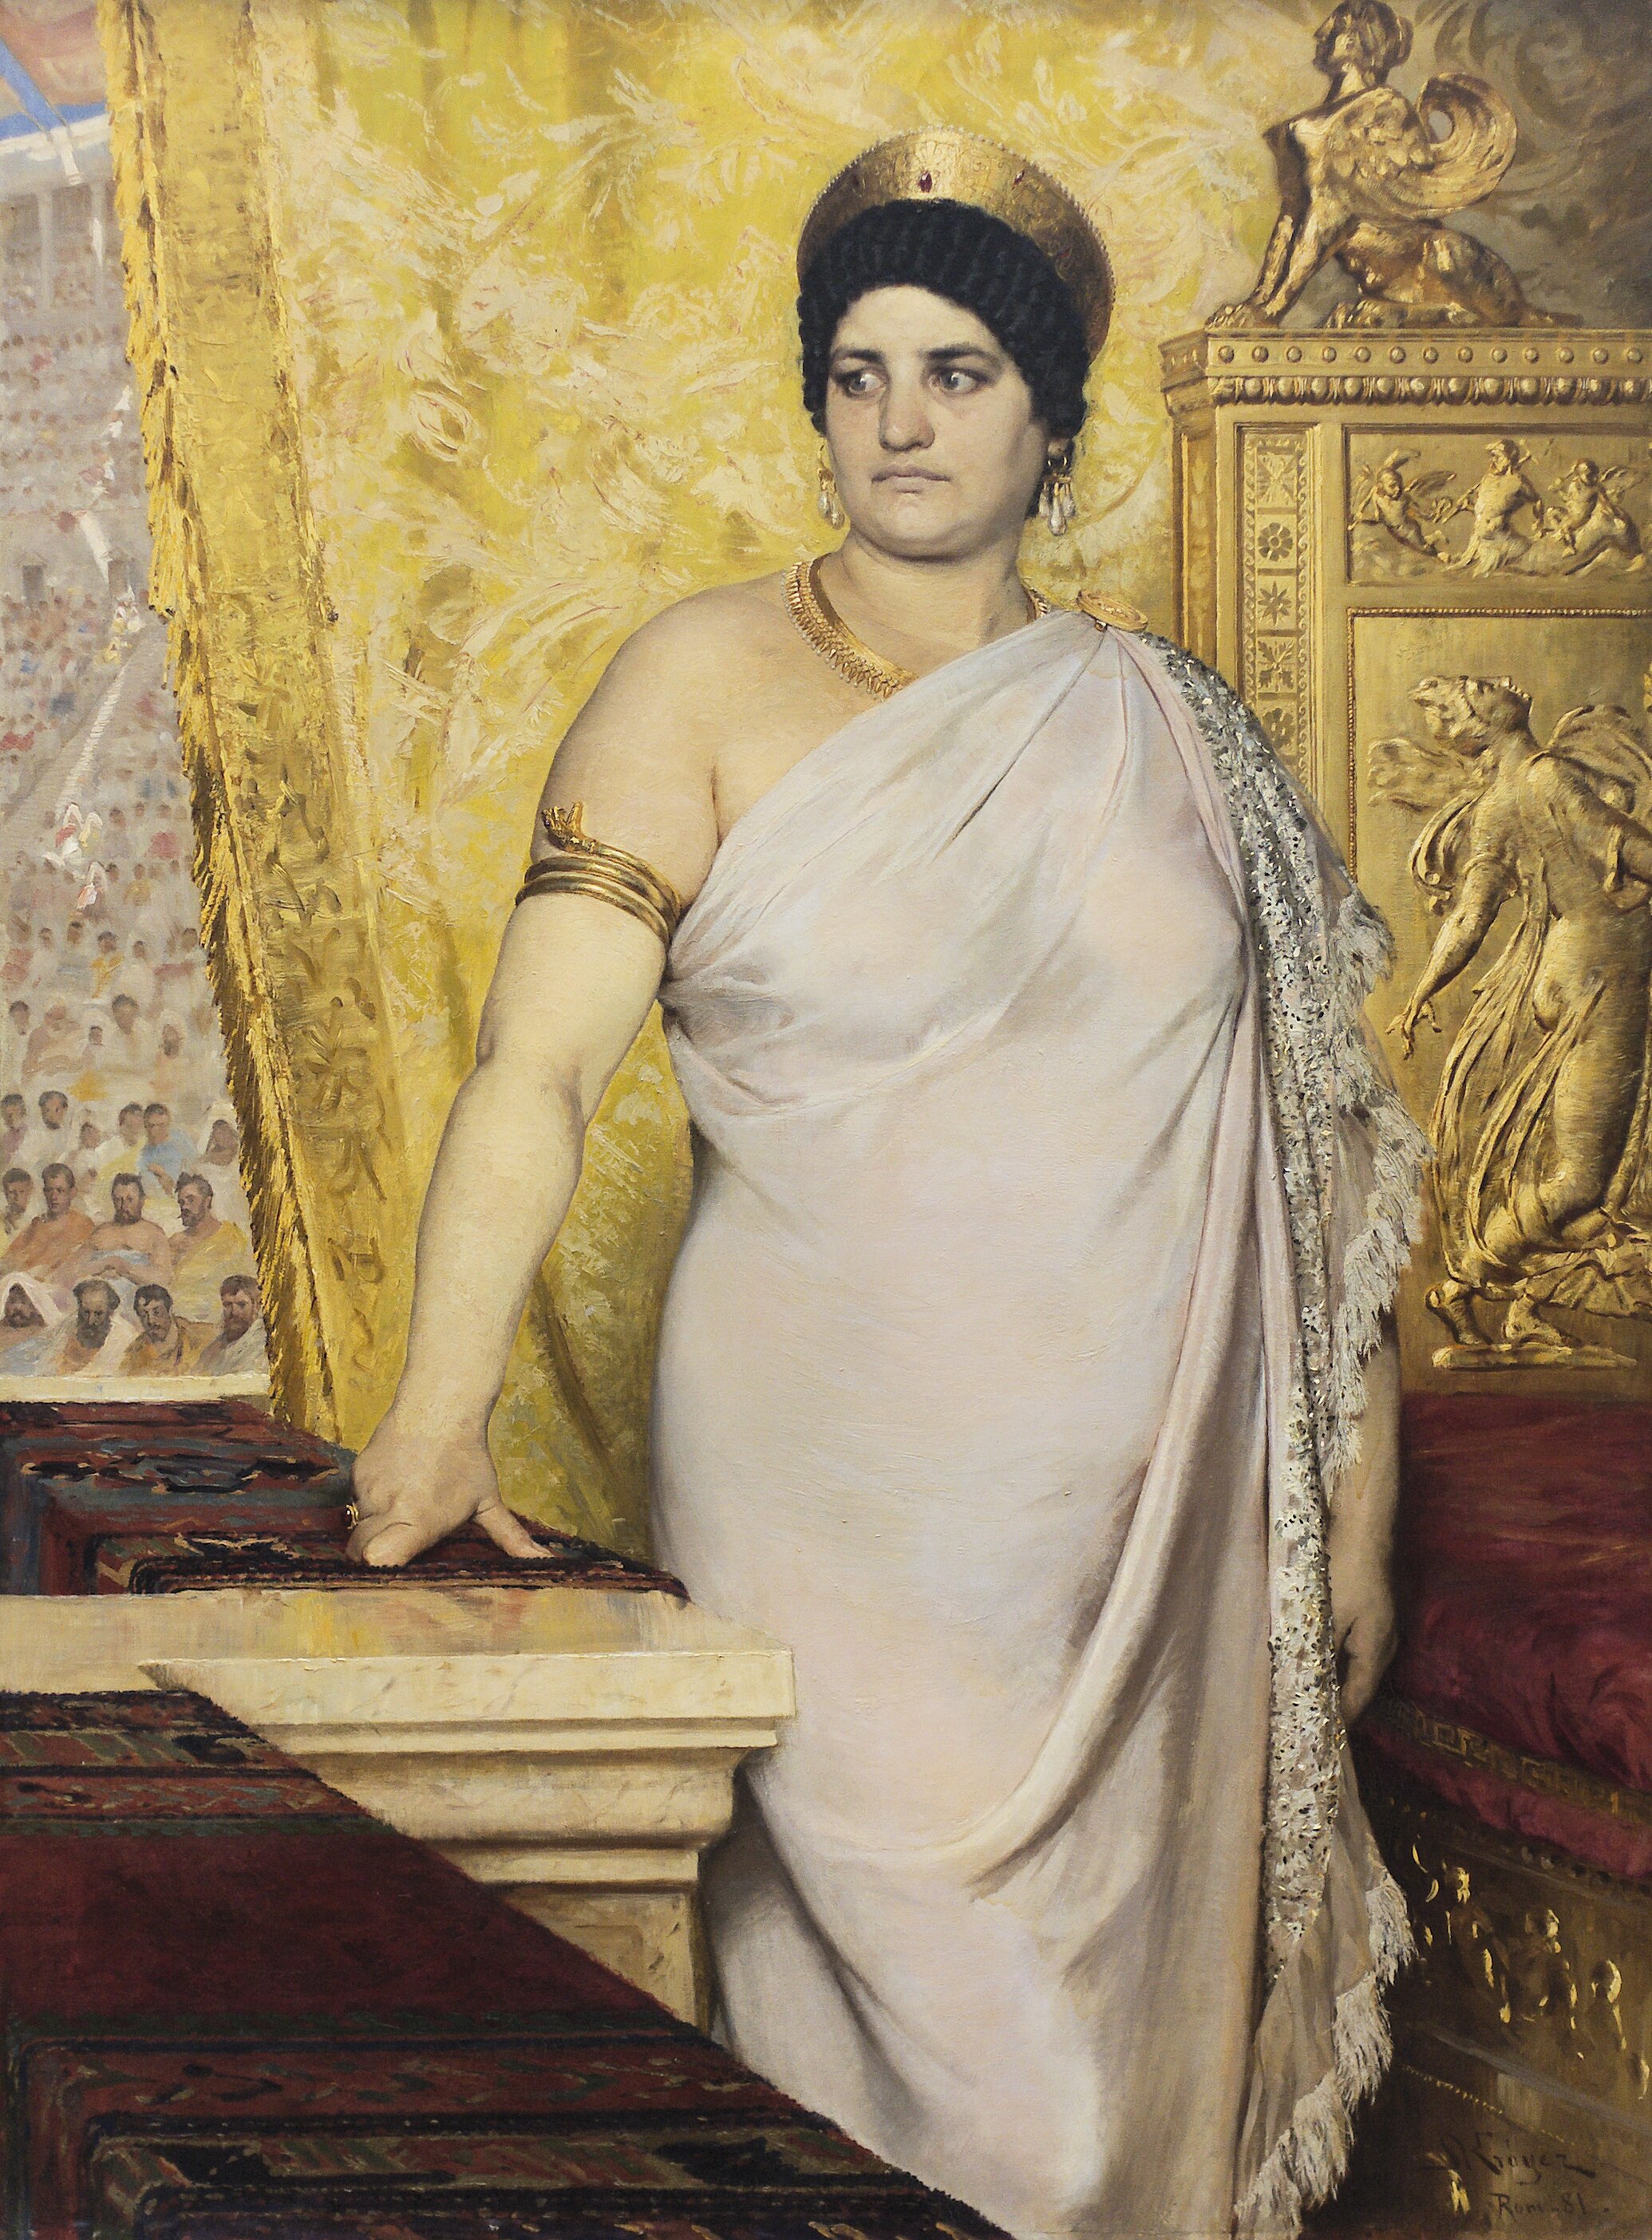 A portrait of Messalina